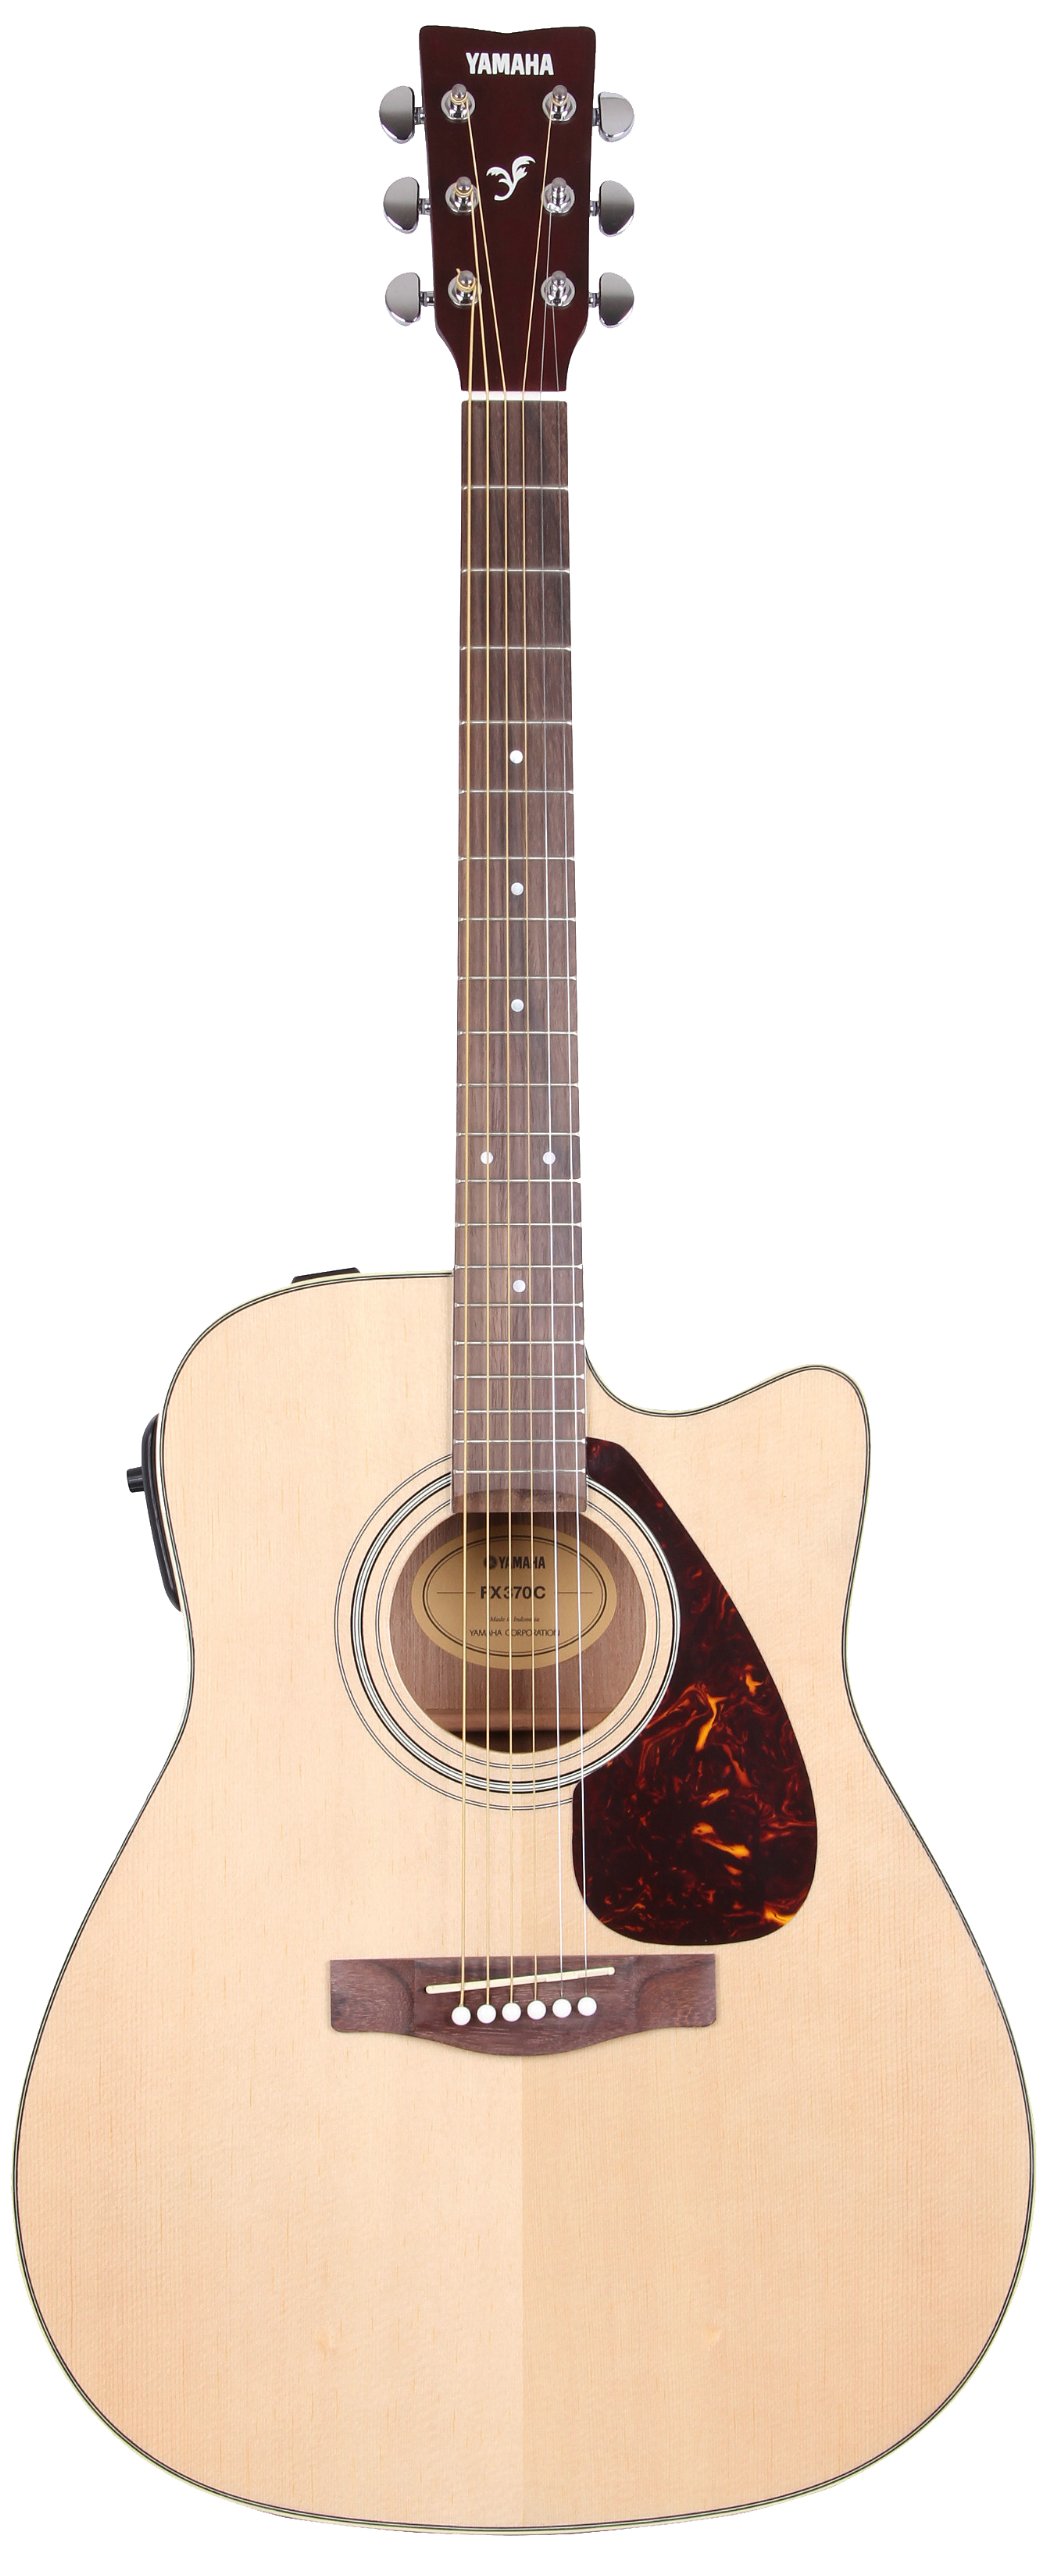 Yamaha FX370C Full Size Electro-Acoustic Guitar - Natural